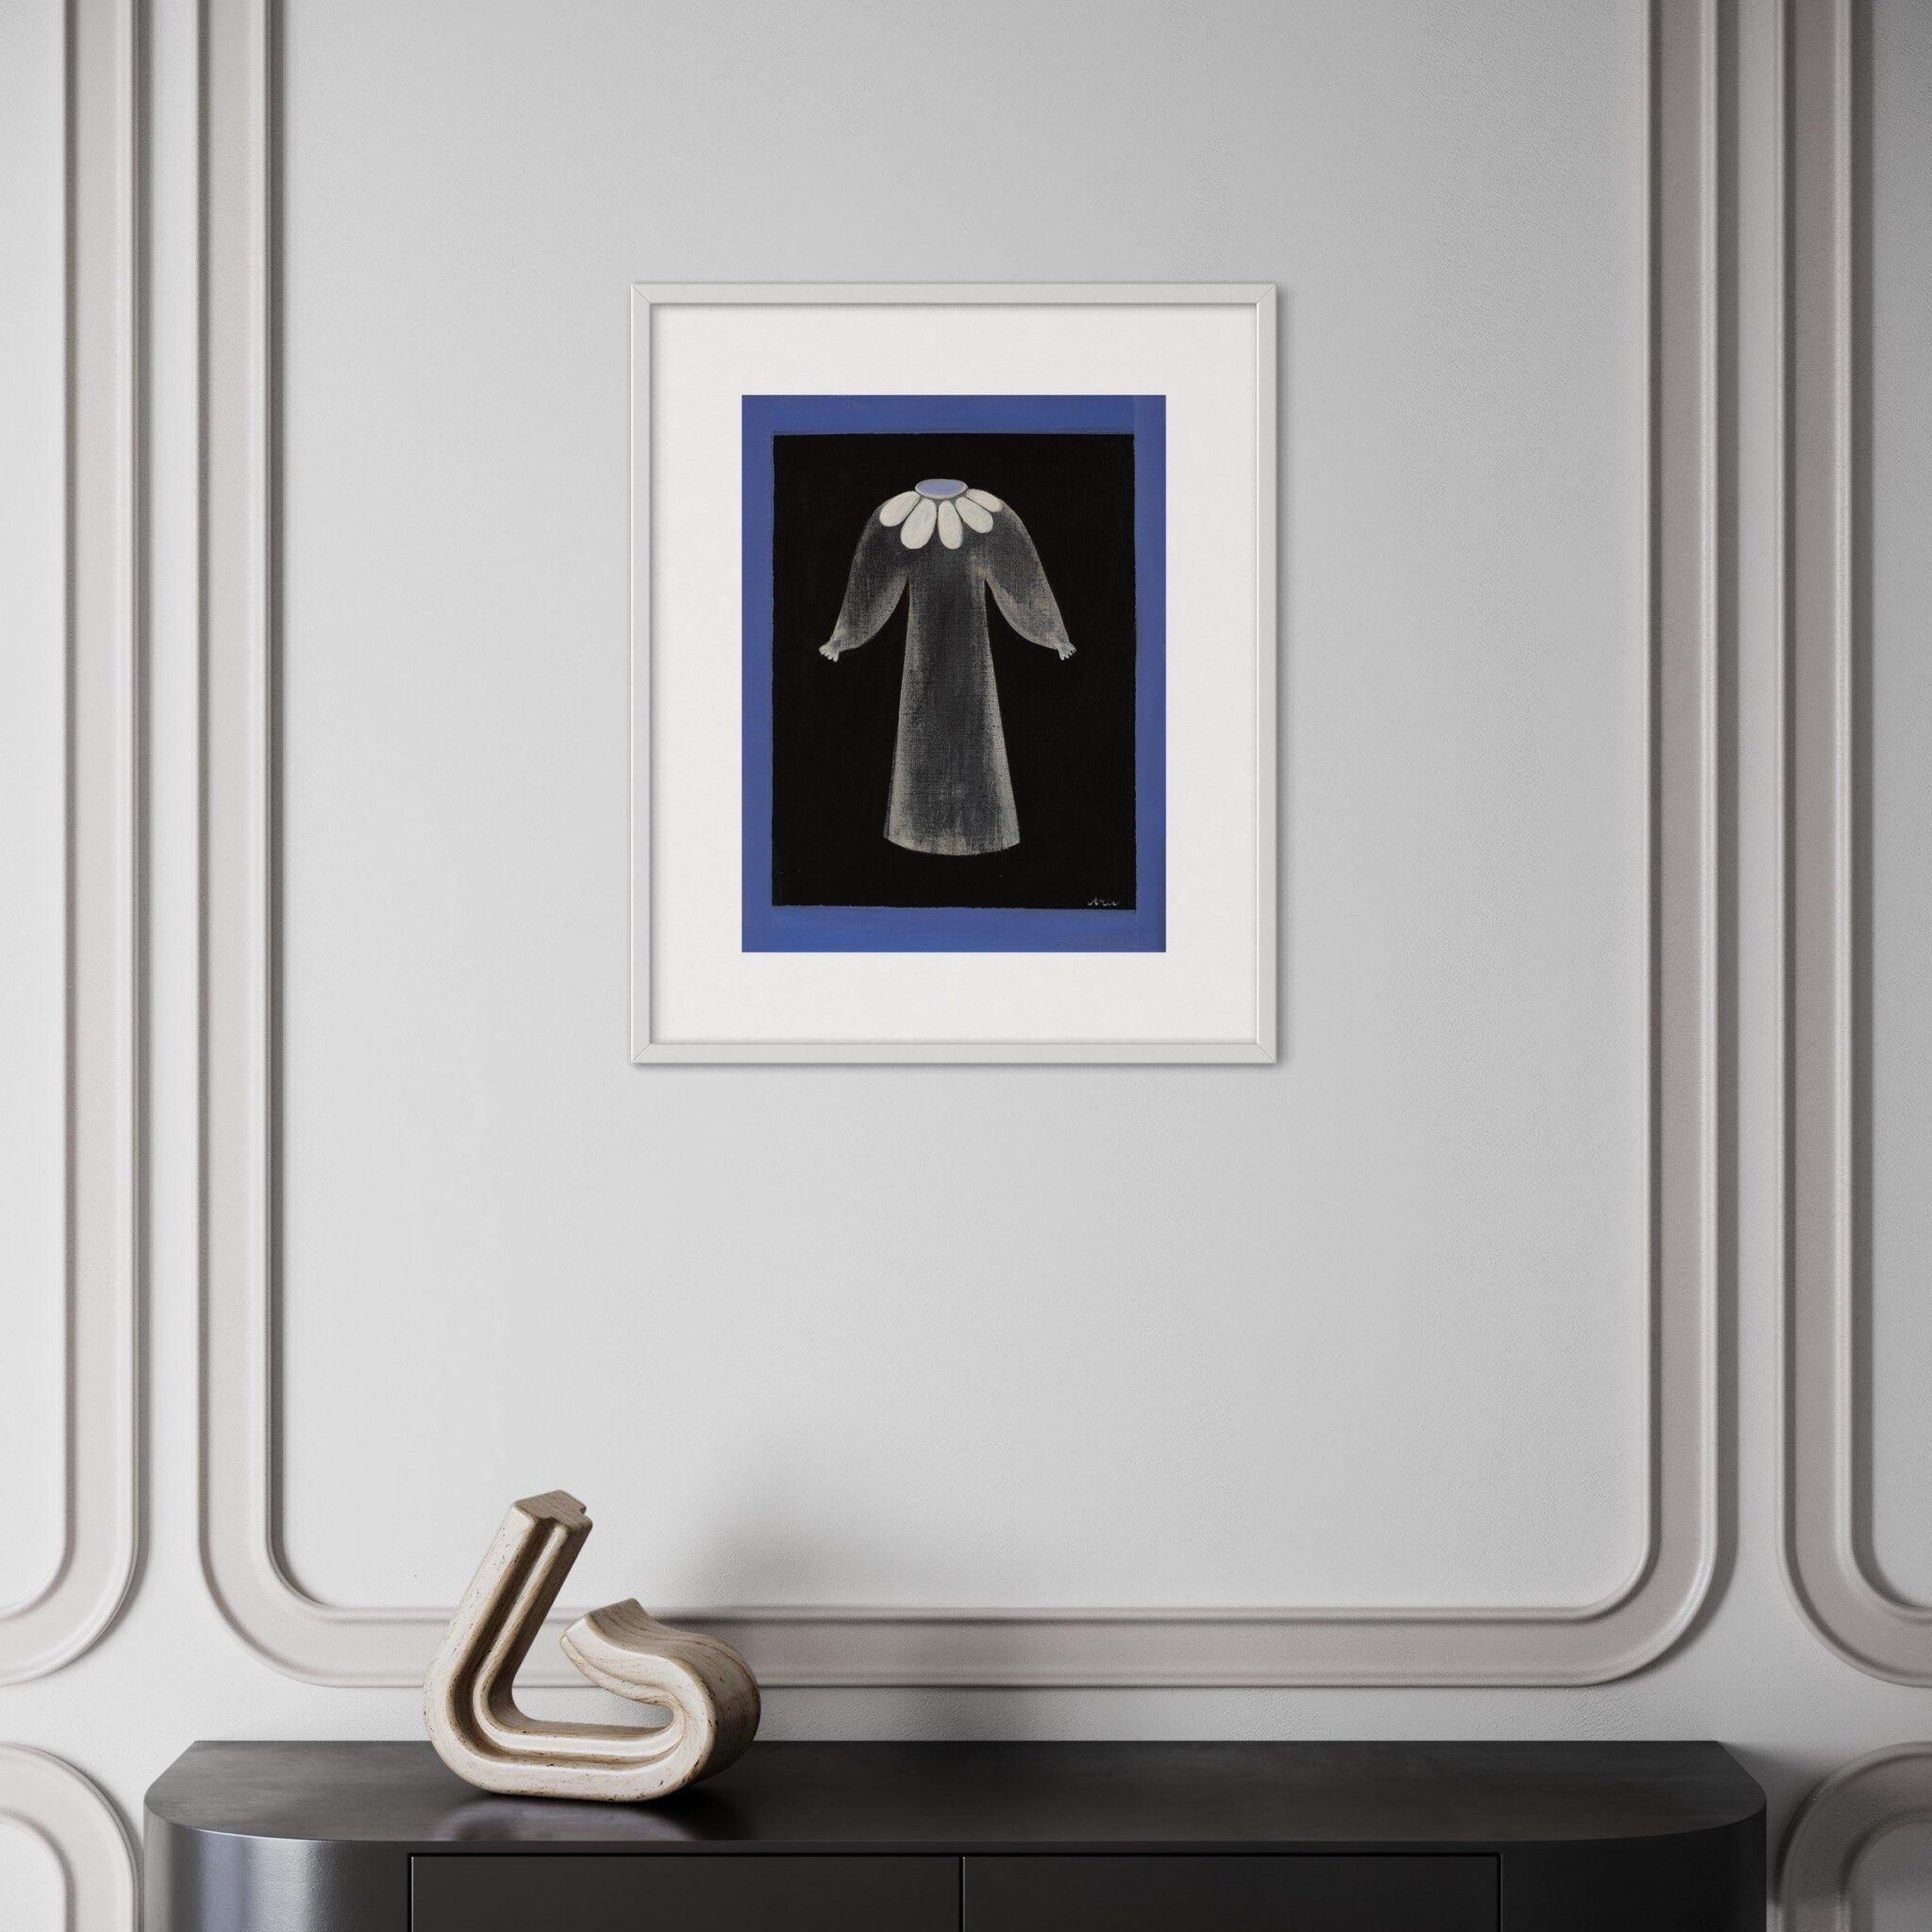 'A White Dress' limited edition print by Ara Radvilė. Size: L